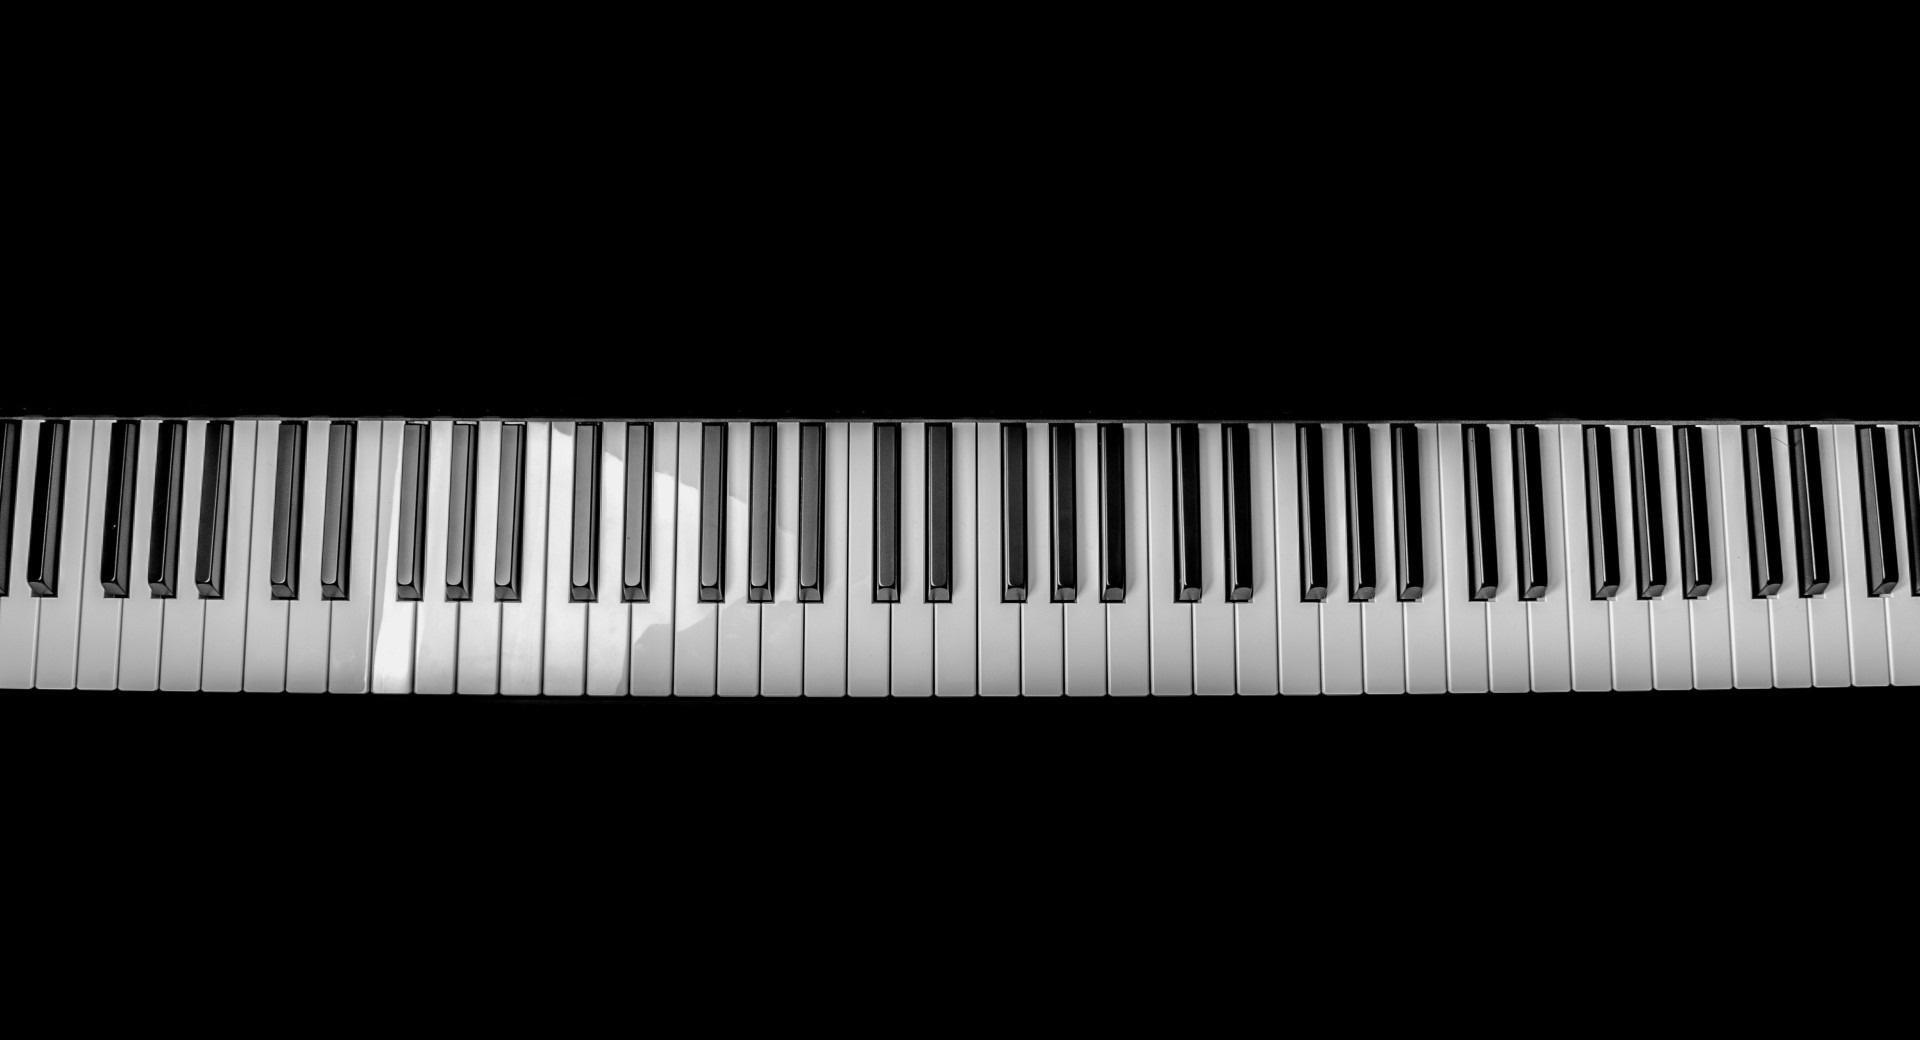 Piano Keyboard at 1024 x 1024 iPad size wallpapers HD quality